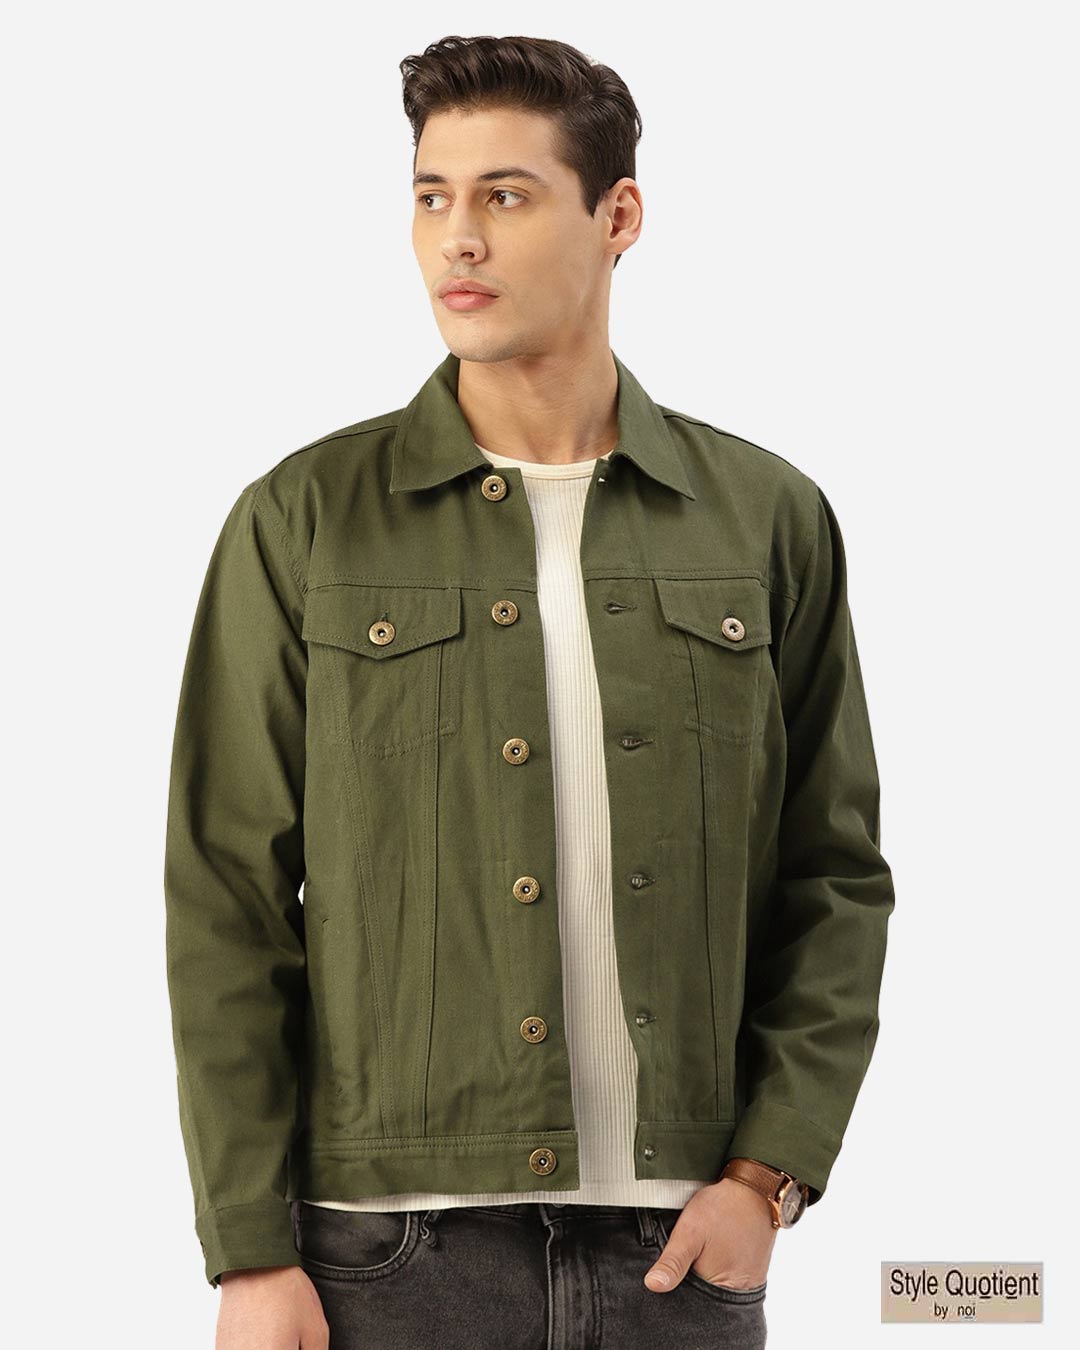 style quotient men olive green solid denim jacket 316659 1638212685 1